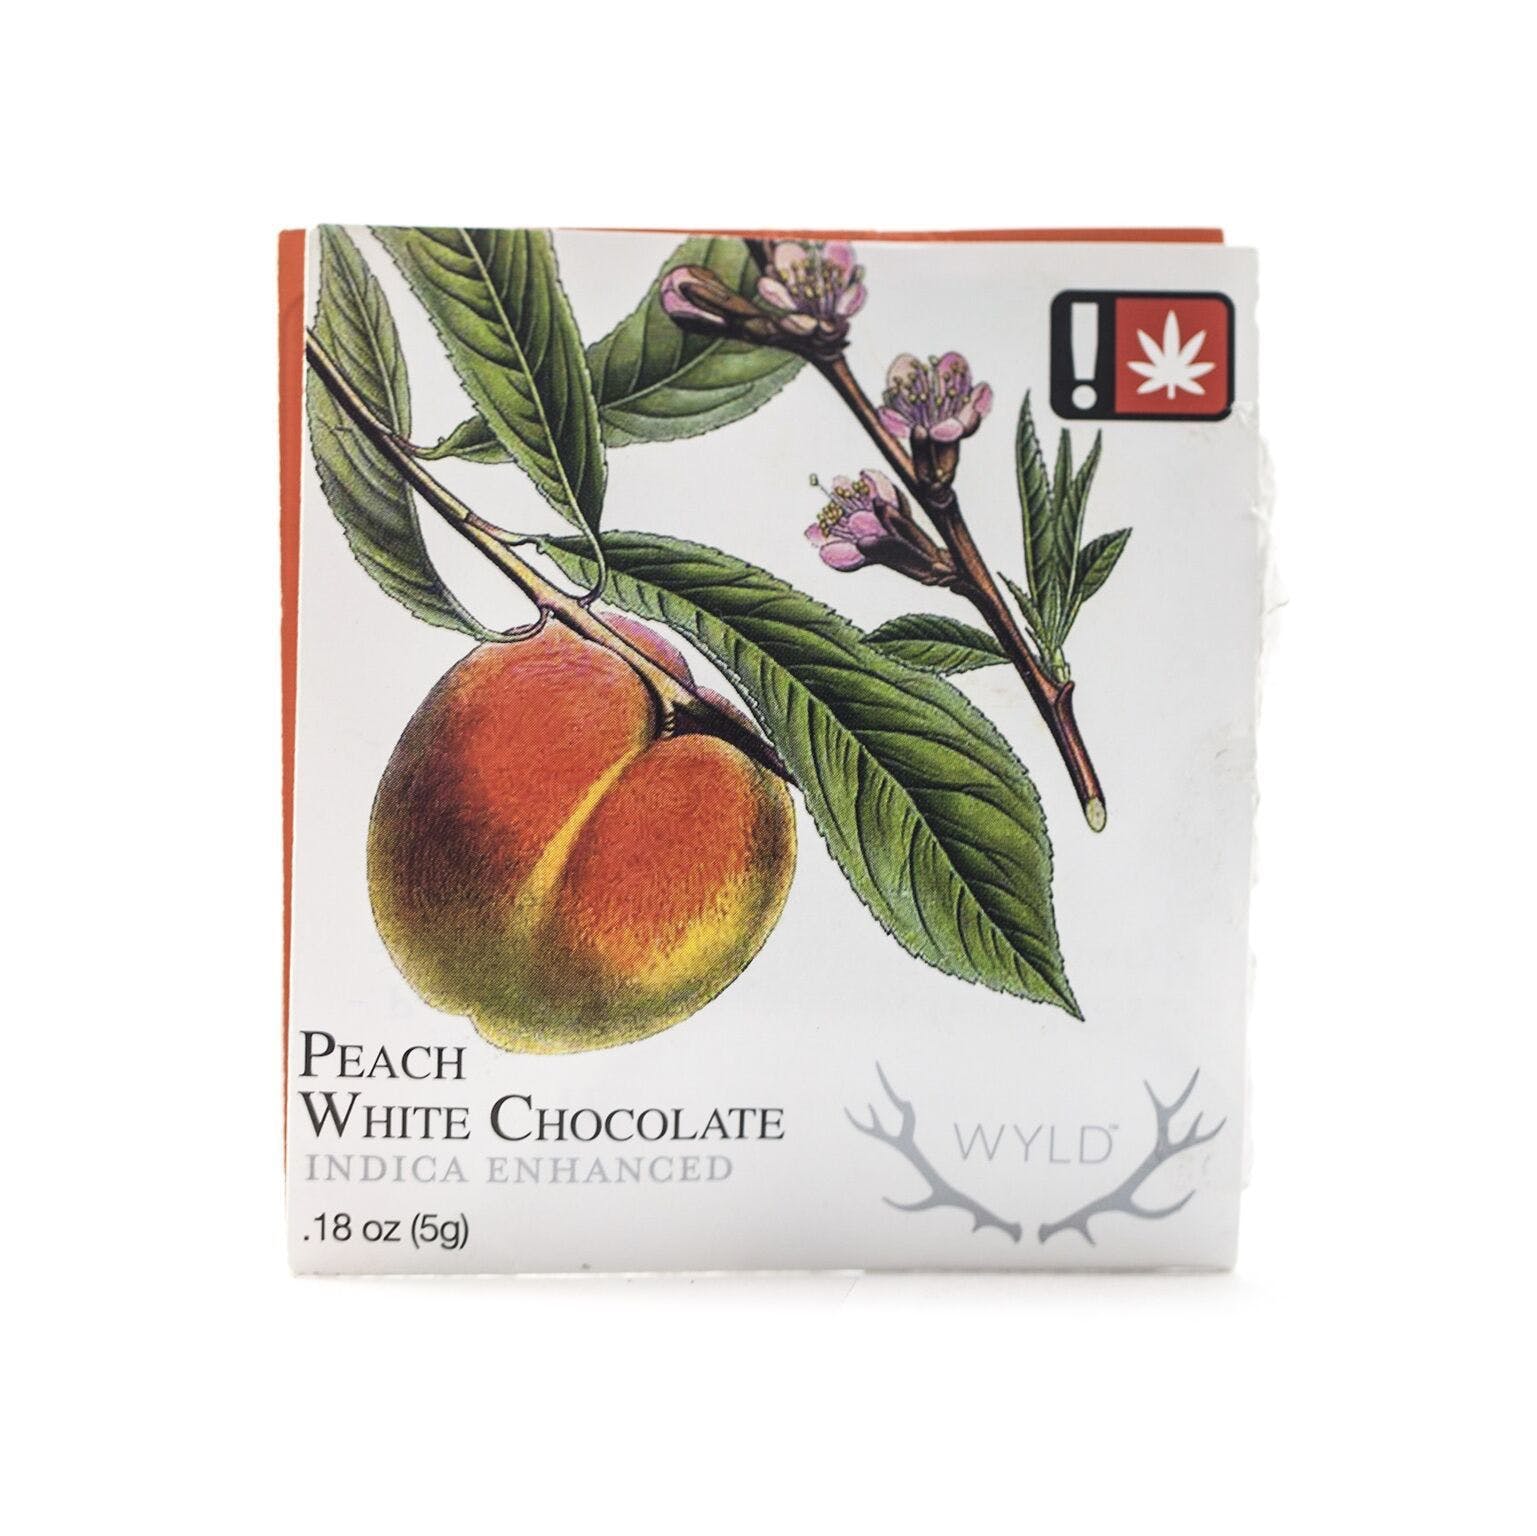 Adult Use - WYLD: Peach White Chocolate 1pk